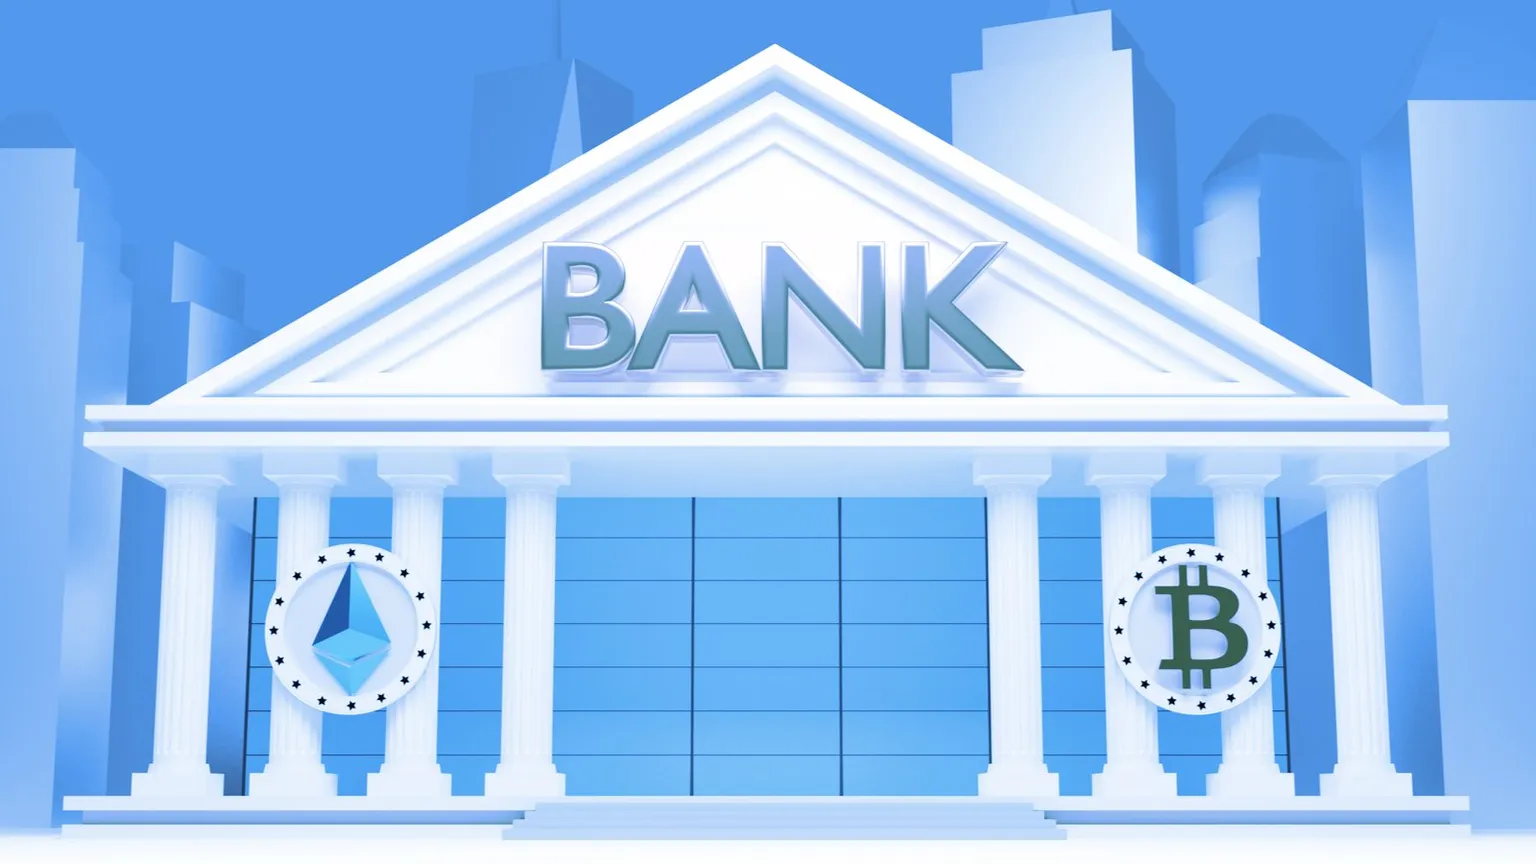 Bancos and criptos. Imagen: Shutterstock